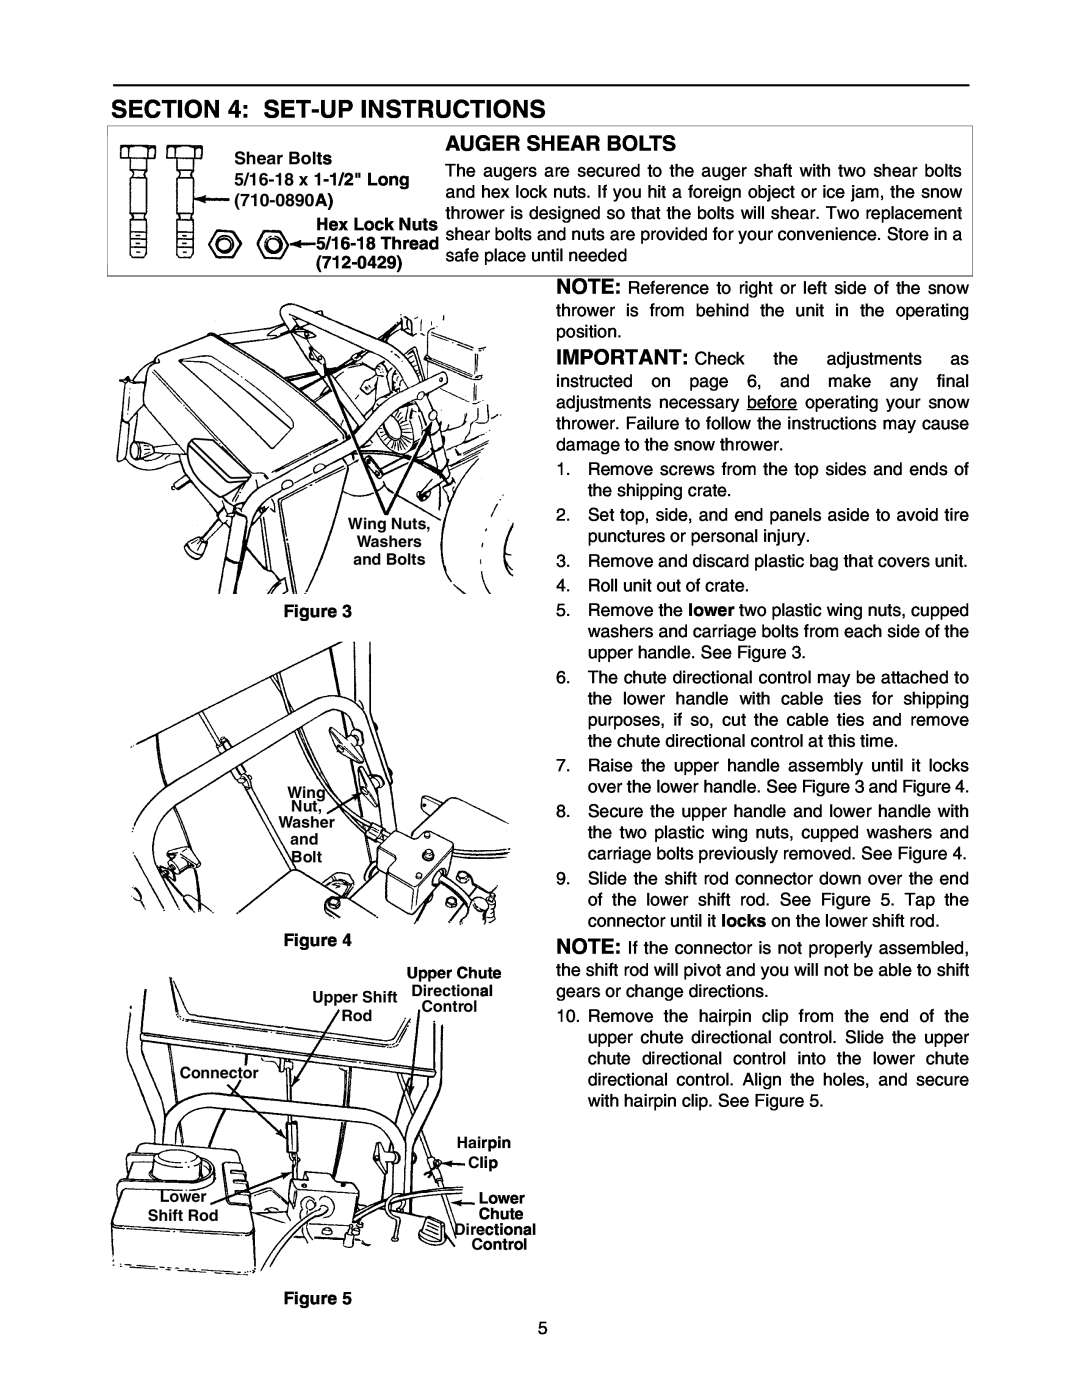 MTD 993 manual Set-Upinstructions, Auger Shear Bolts, 5/16-18x 1-1/2Long, 710-0890A, Hex Lock Nuts, 712-0429 